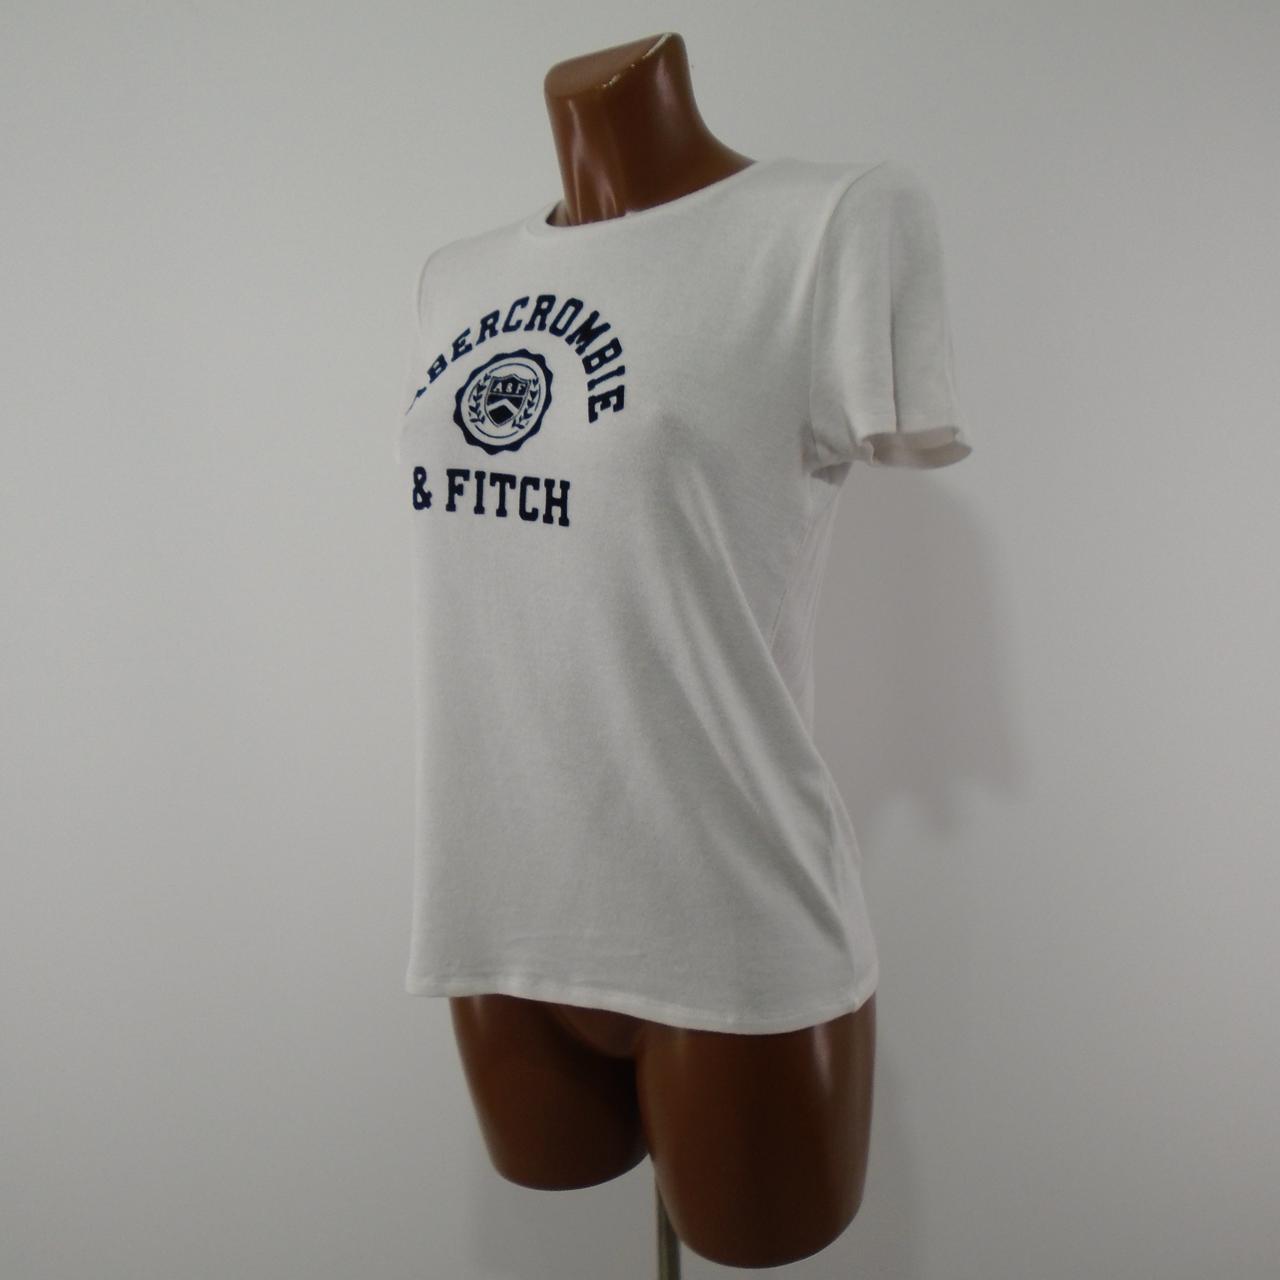 Camiseta mujer Abercrombie &amp; Fitch. Blanco. M. Usado. Bien